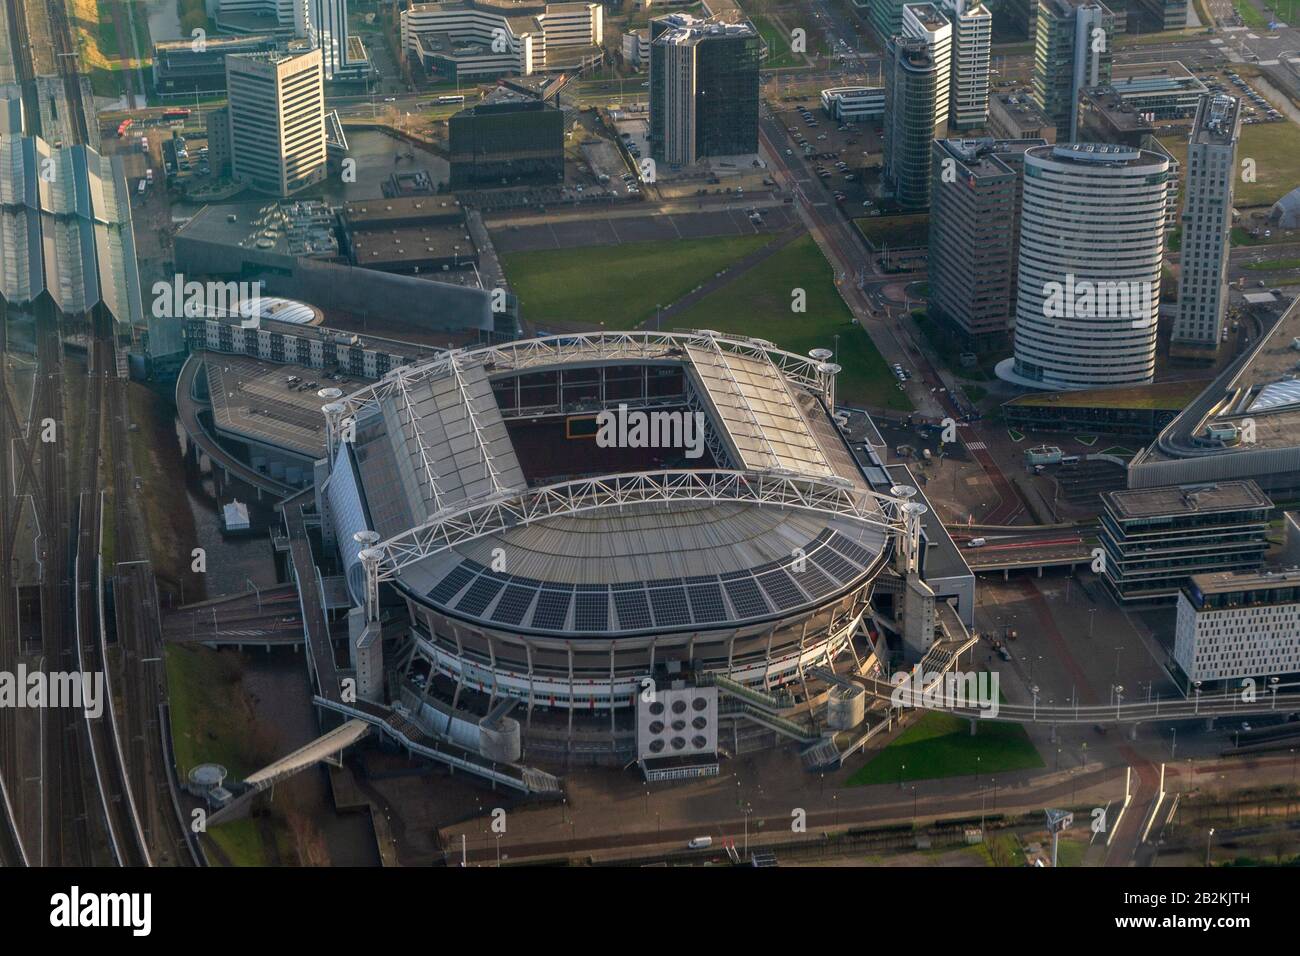 amsterdam arena stadium aerial view from airplane Stock Photo